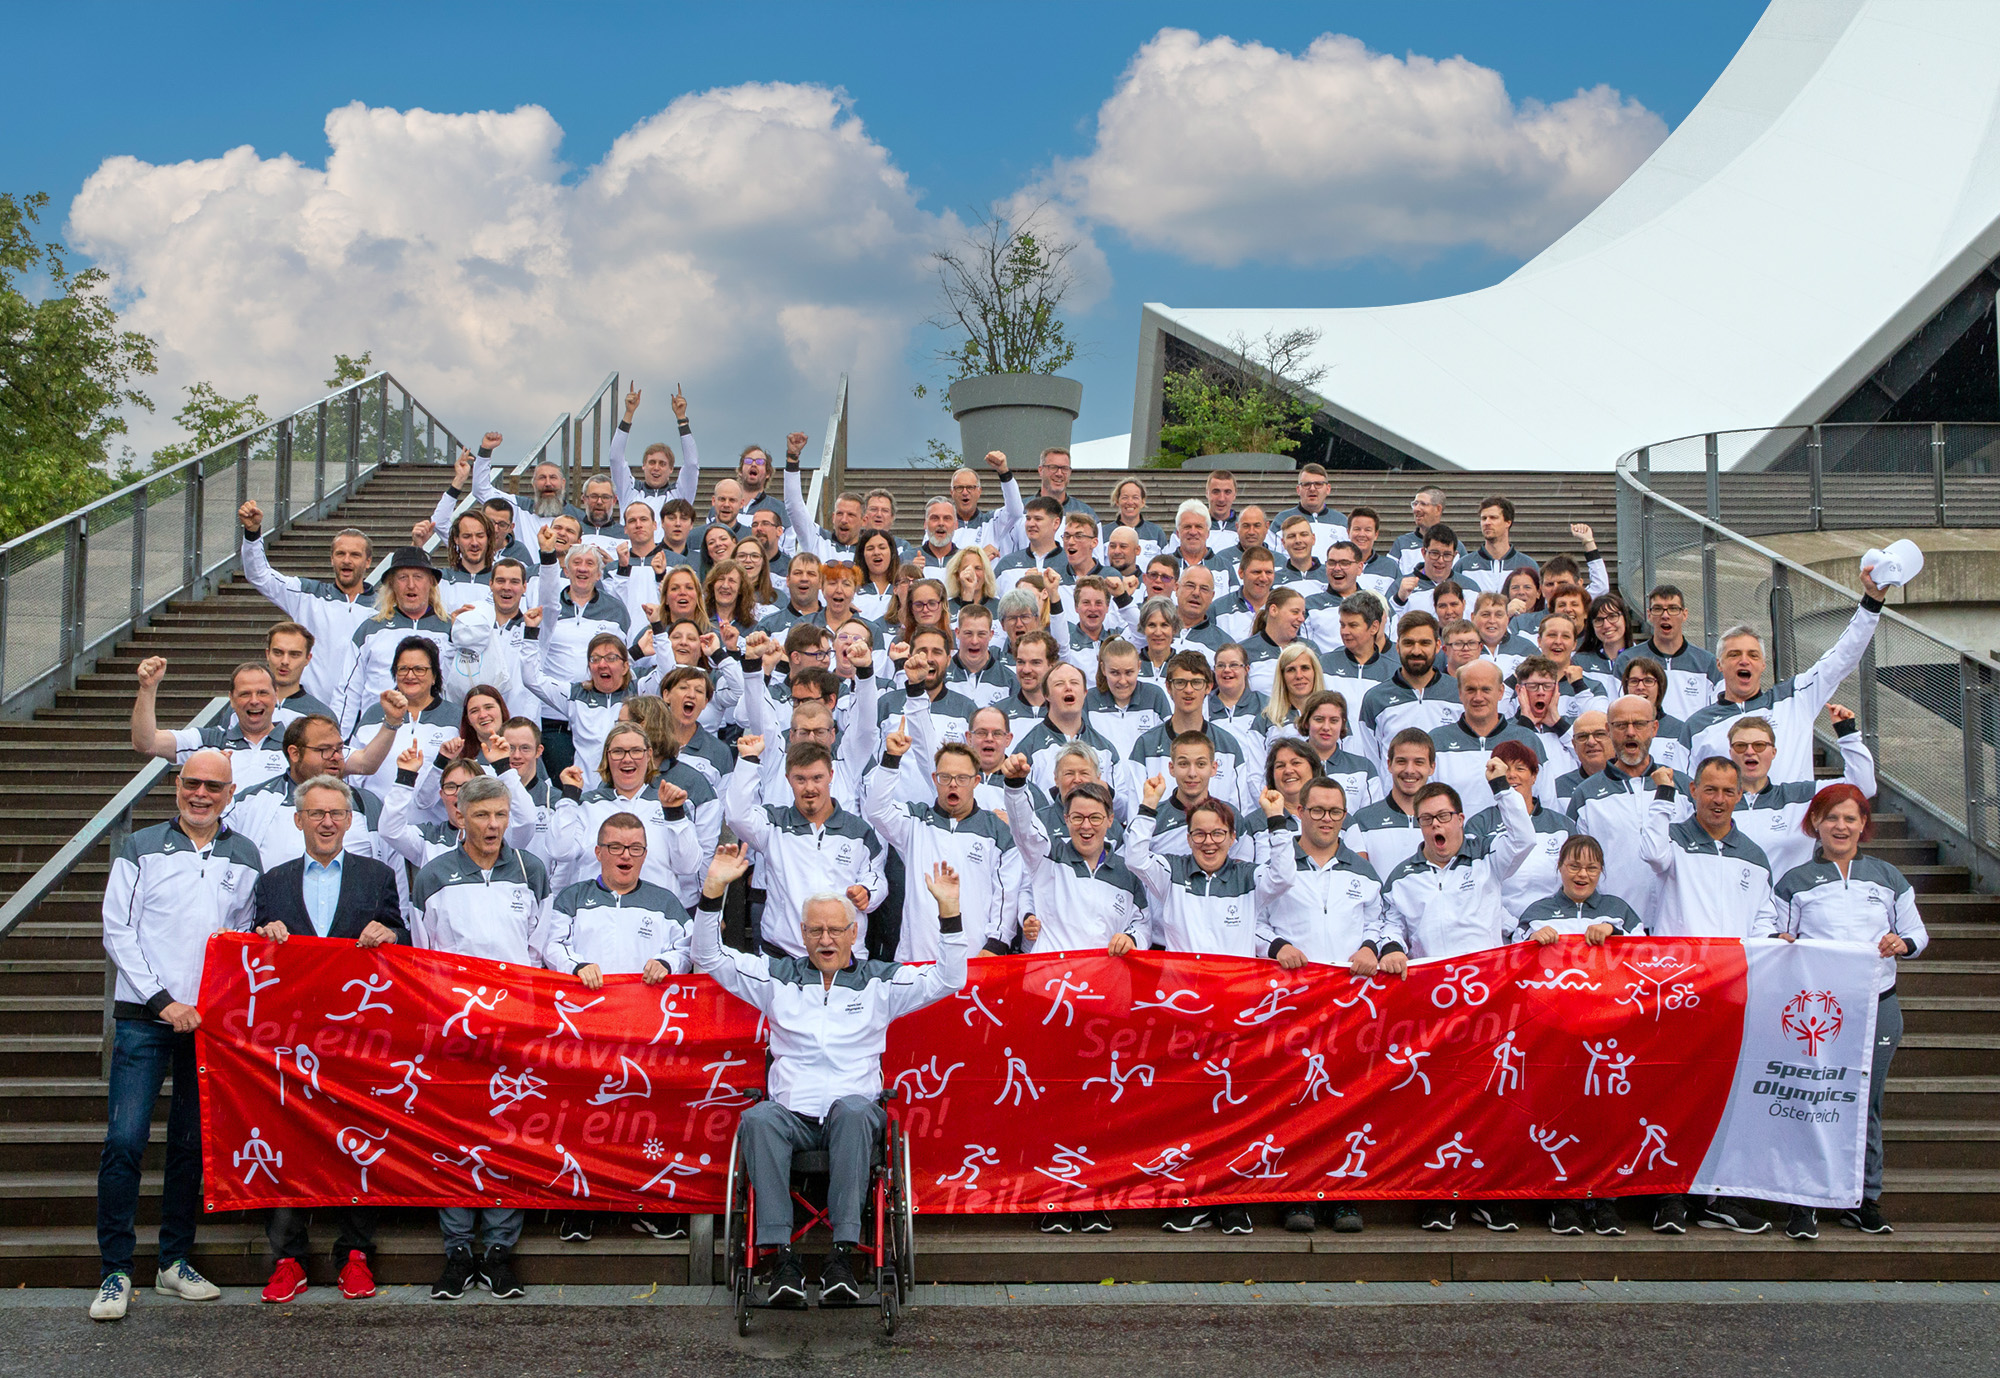 österreichische Delegation | GEPA pictures/Special Olympics